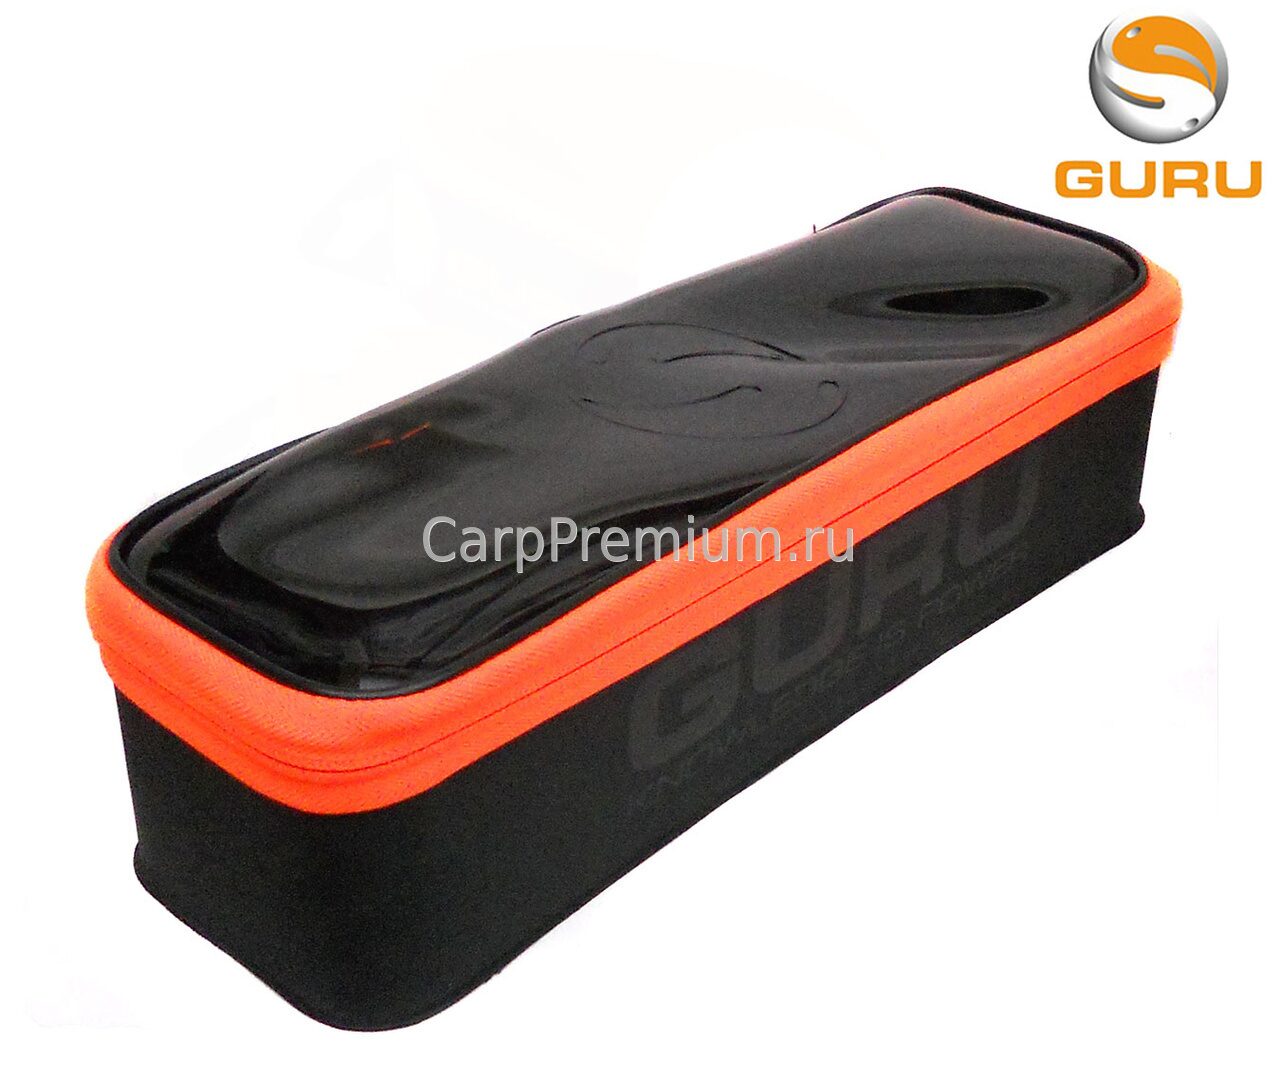 Коробка Guru (Гуру) - Fusion 420 long, Размер Длинный